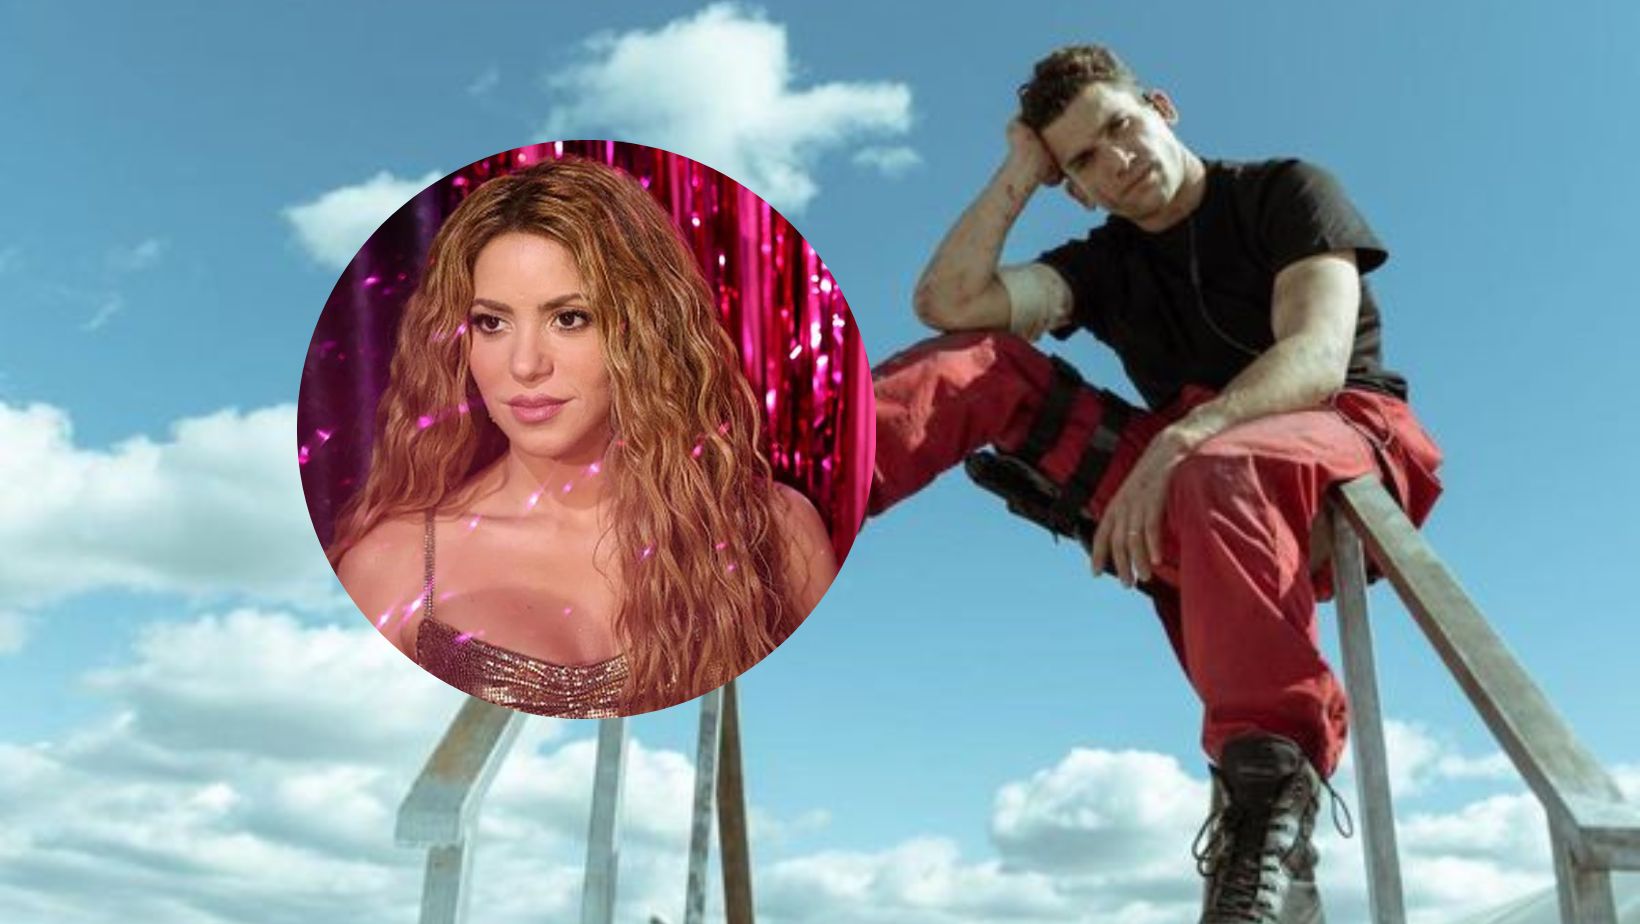 Jaime Lorente, actor de 'La casa de papel', criticó a Shakira en redes sociales